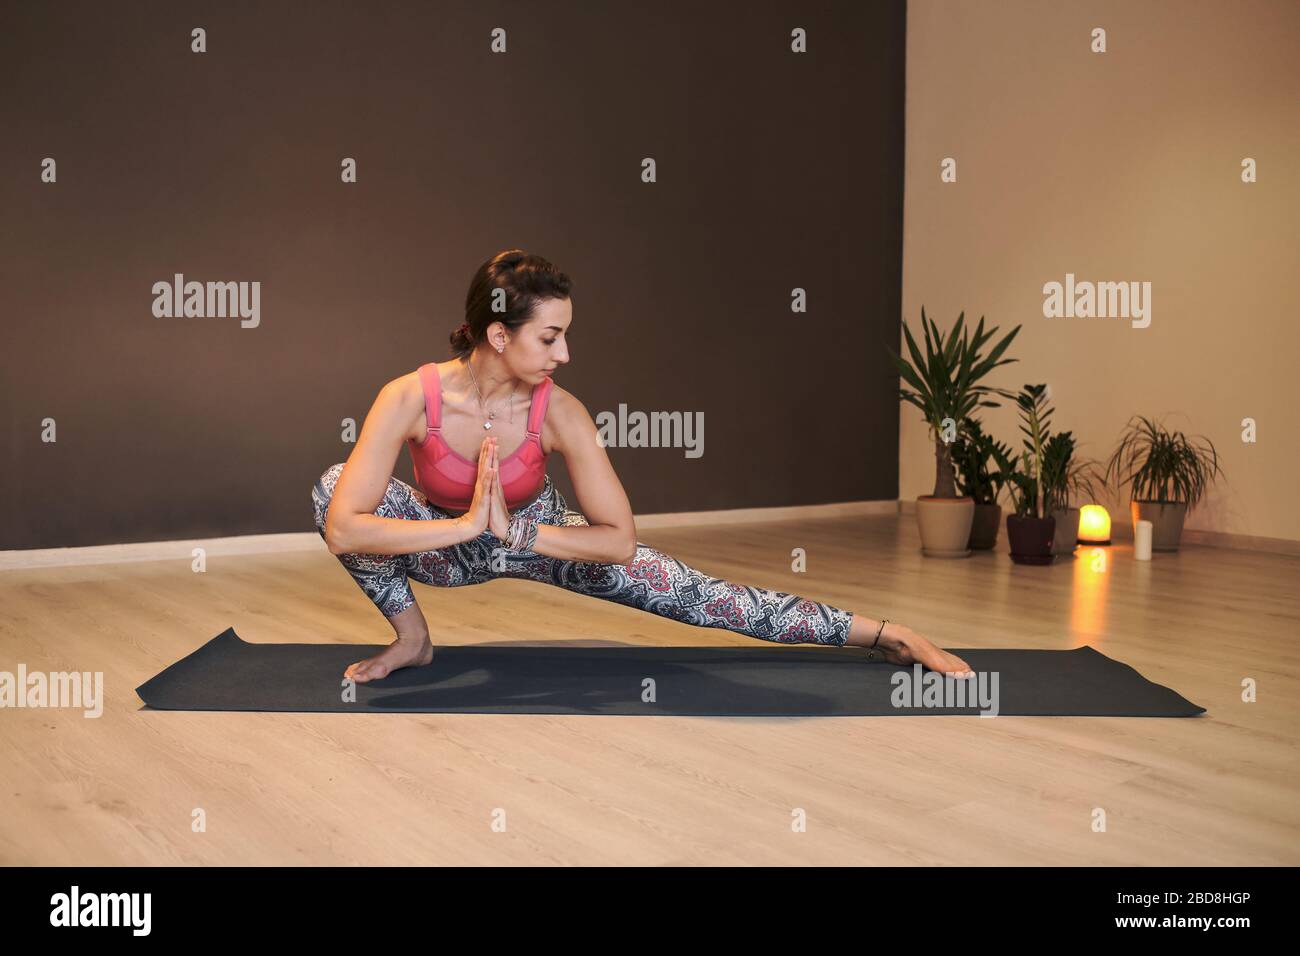 Junge Frau beim Yoga auf Yogamatte in stimmungsvollem Yoga-Studio Stockfoto